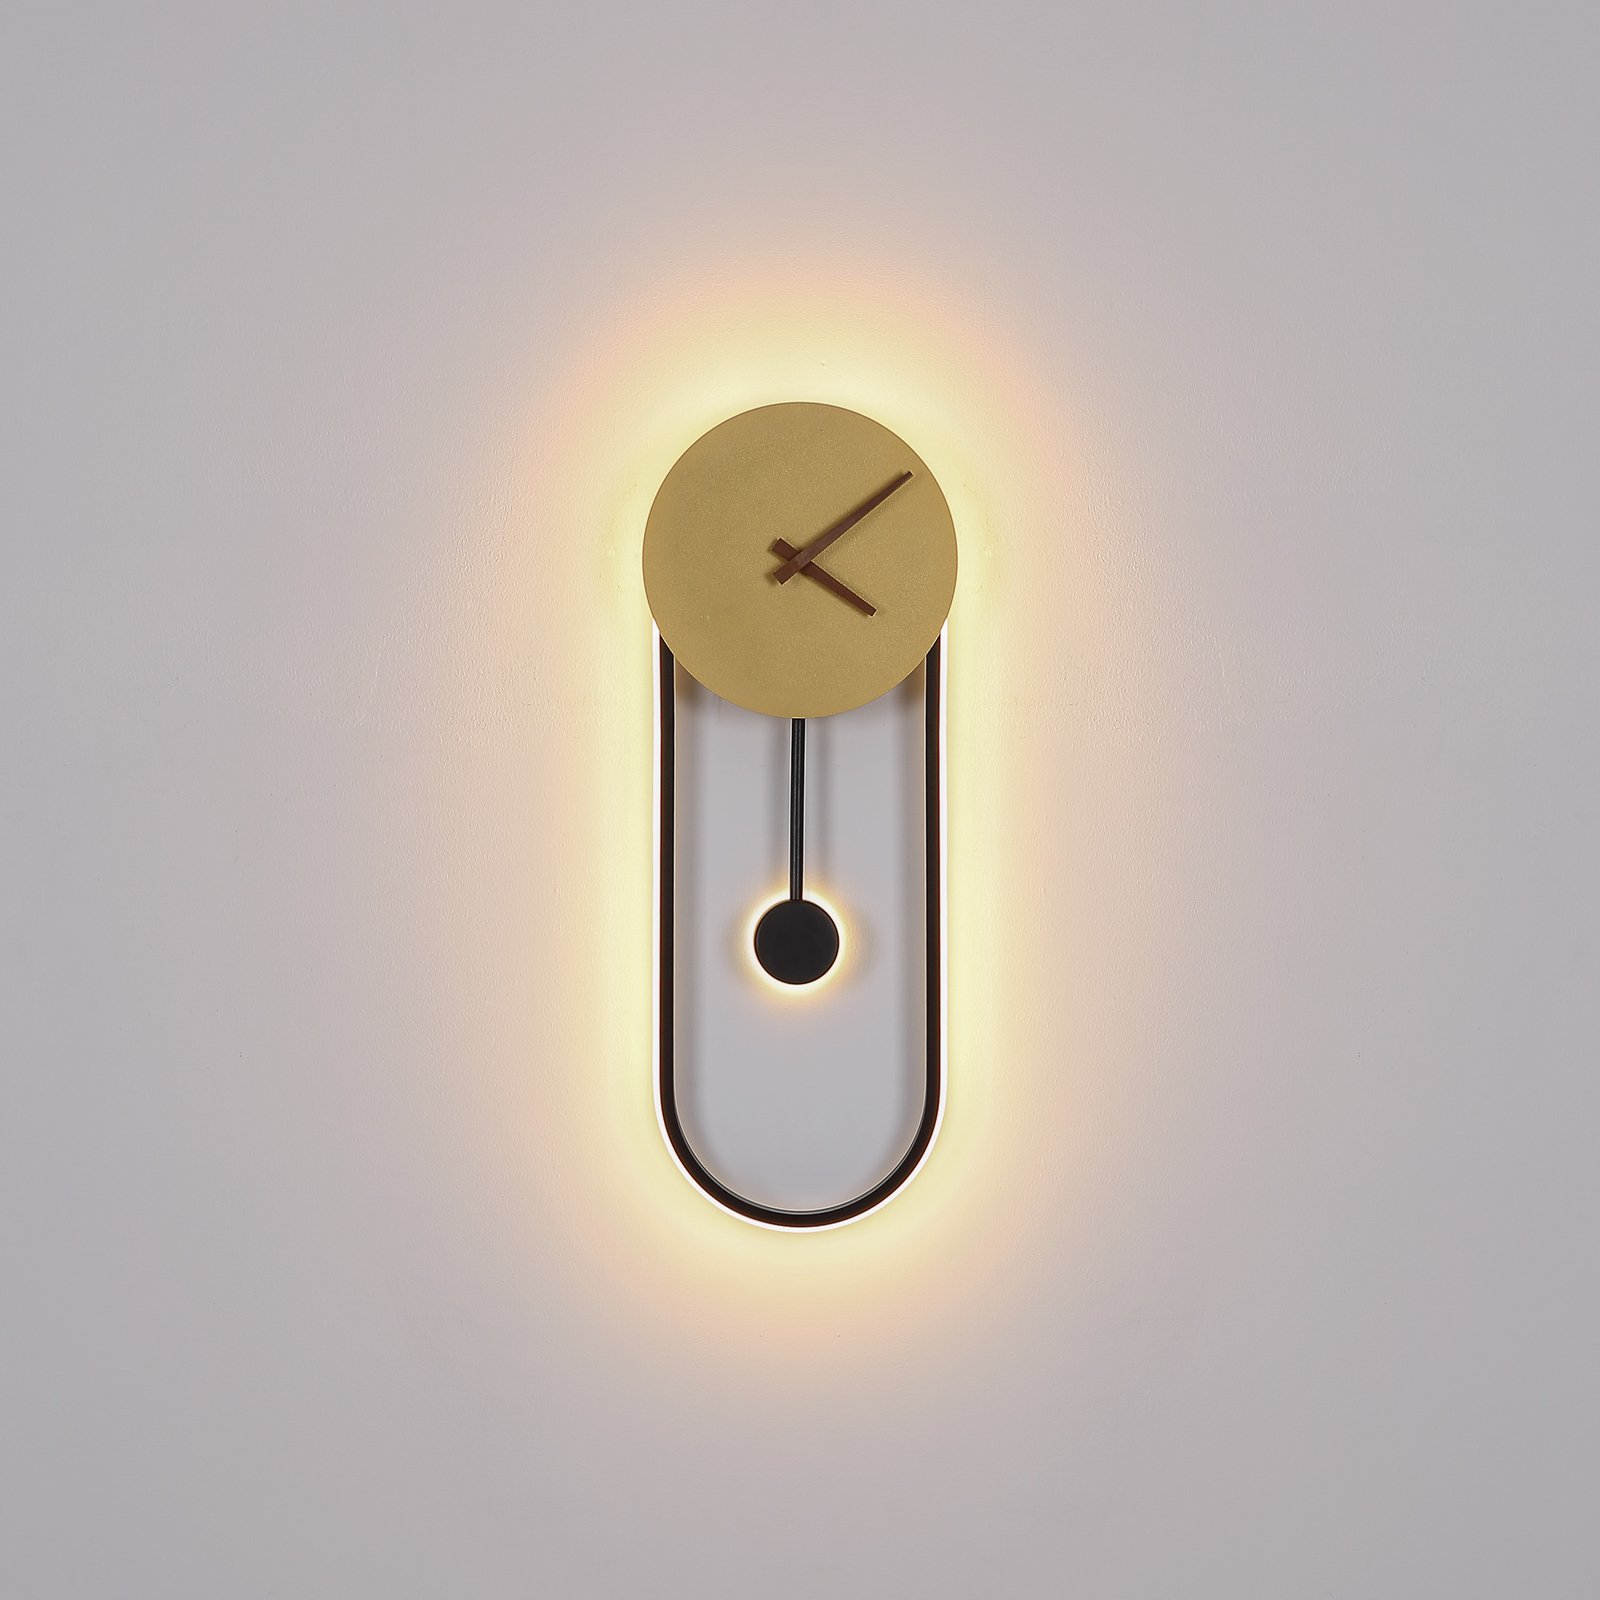 LED wandlamp Sussy met klok, zwart/goud